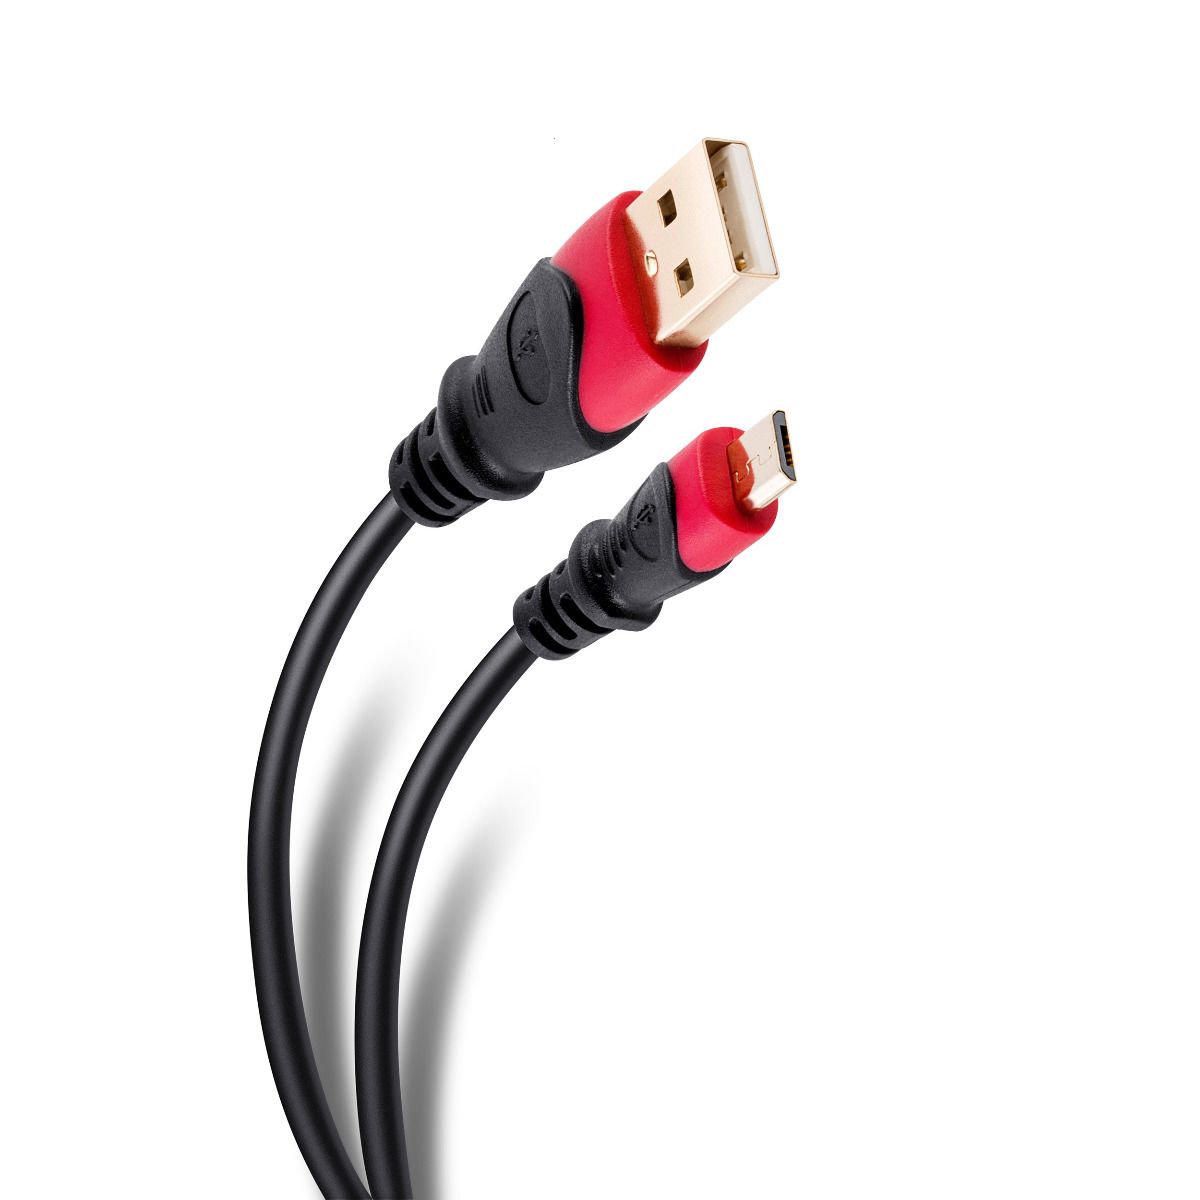 Cable Elite reforzado USB a micro USB, de 1.8 m Steren